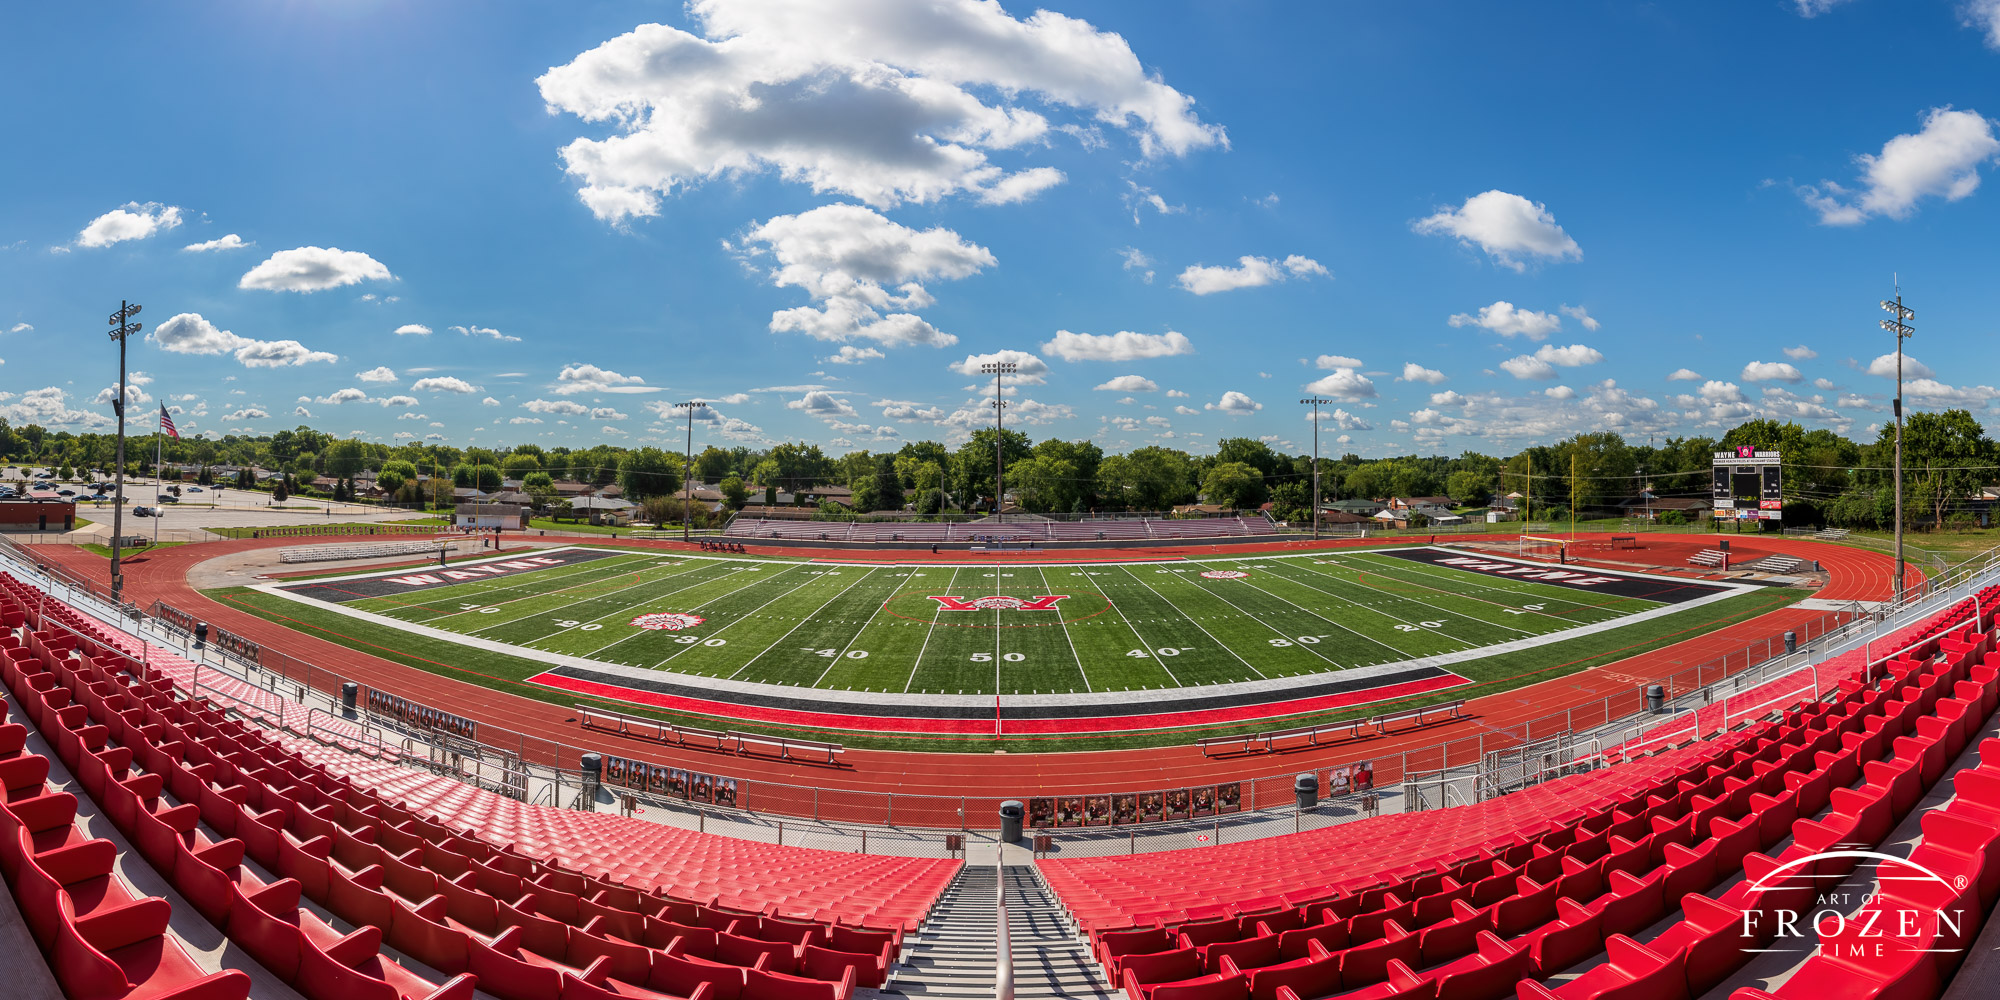 A panoramic view of Wayne High School’s Heidkamp Stadium from the press box